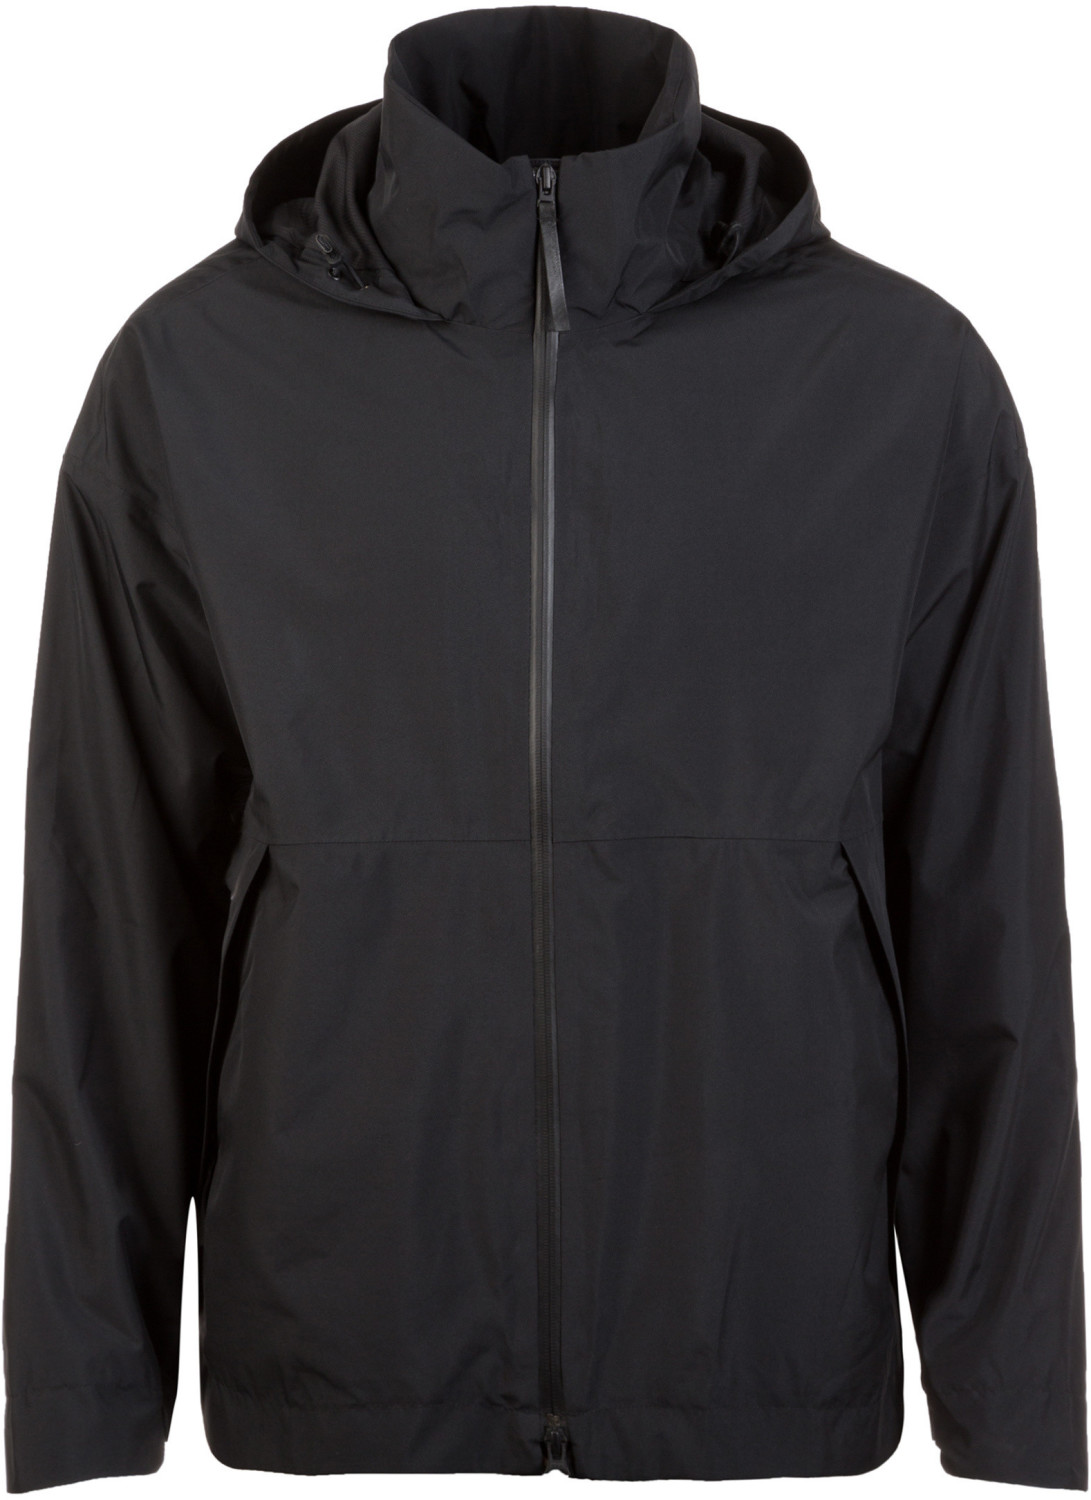 Adidas Men's Urban Climaproof Rain Jacket black (DQ1617)